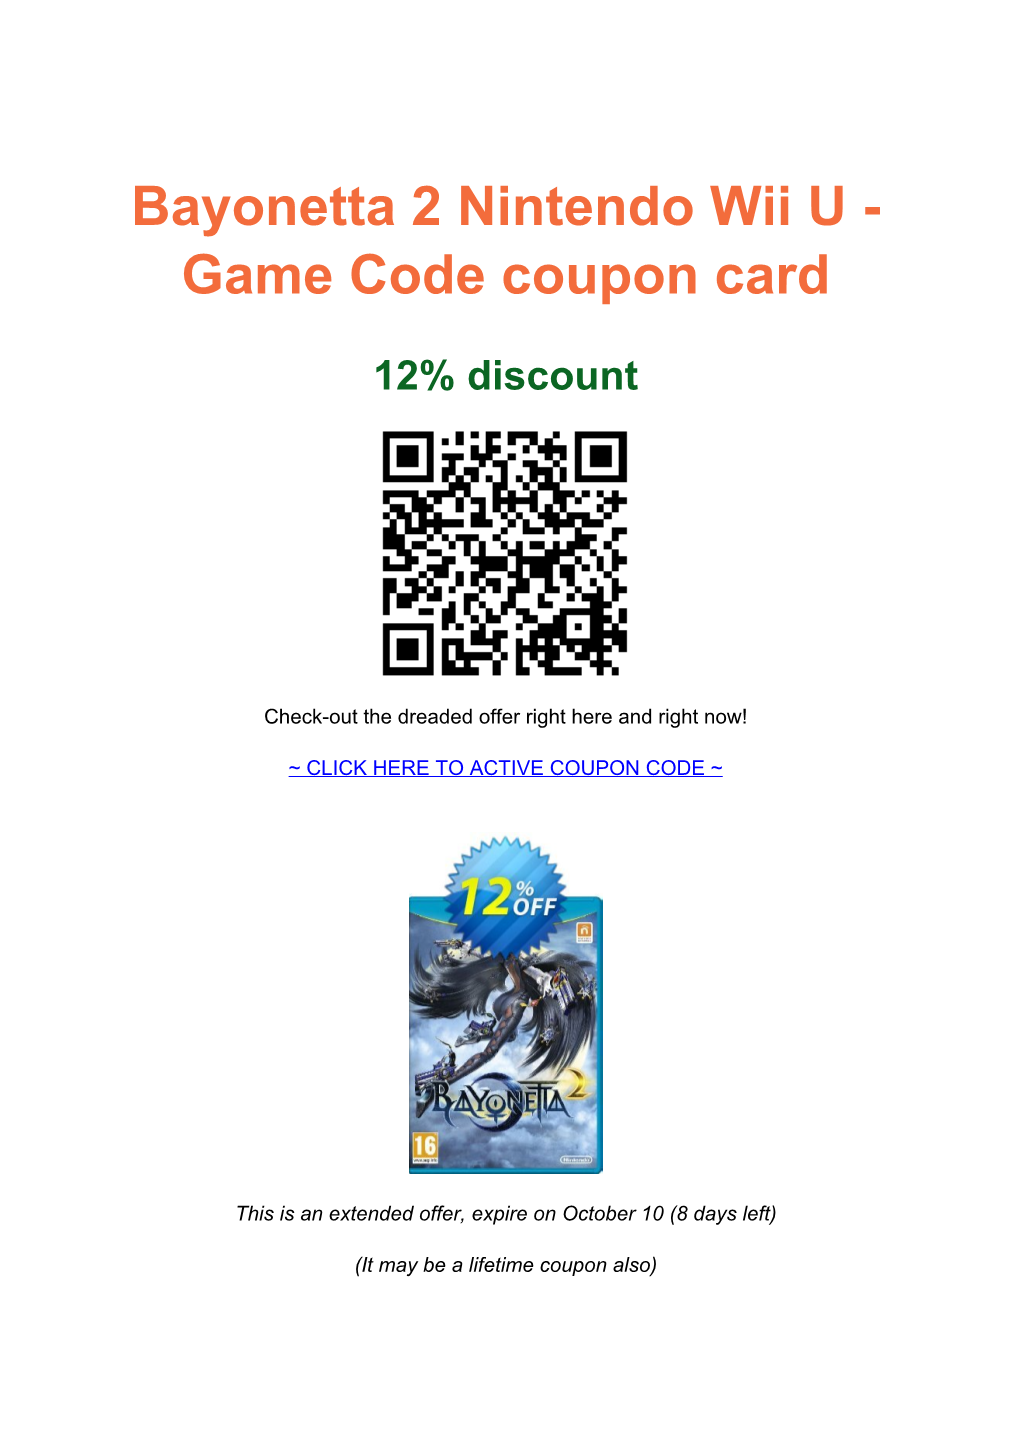 Bayonetta 2 Nintendo Wii U - Game Code Coupon Card